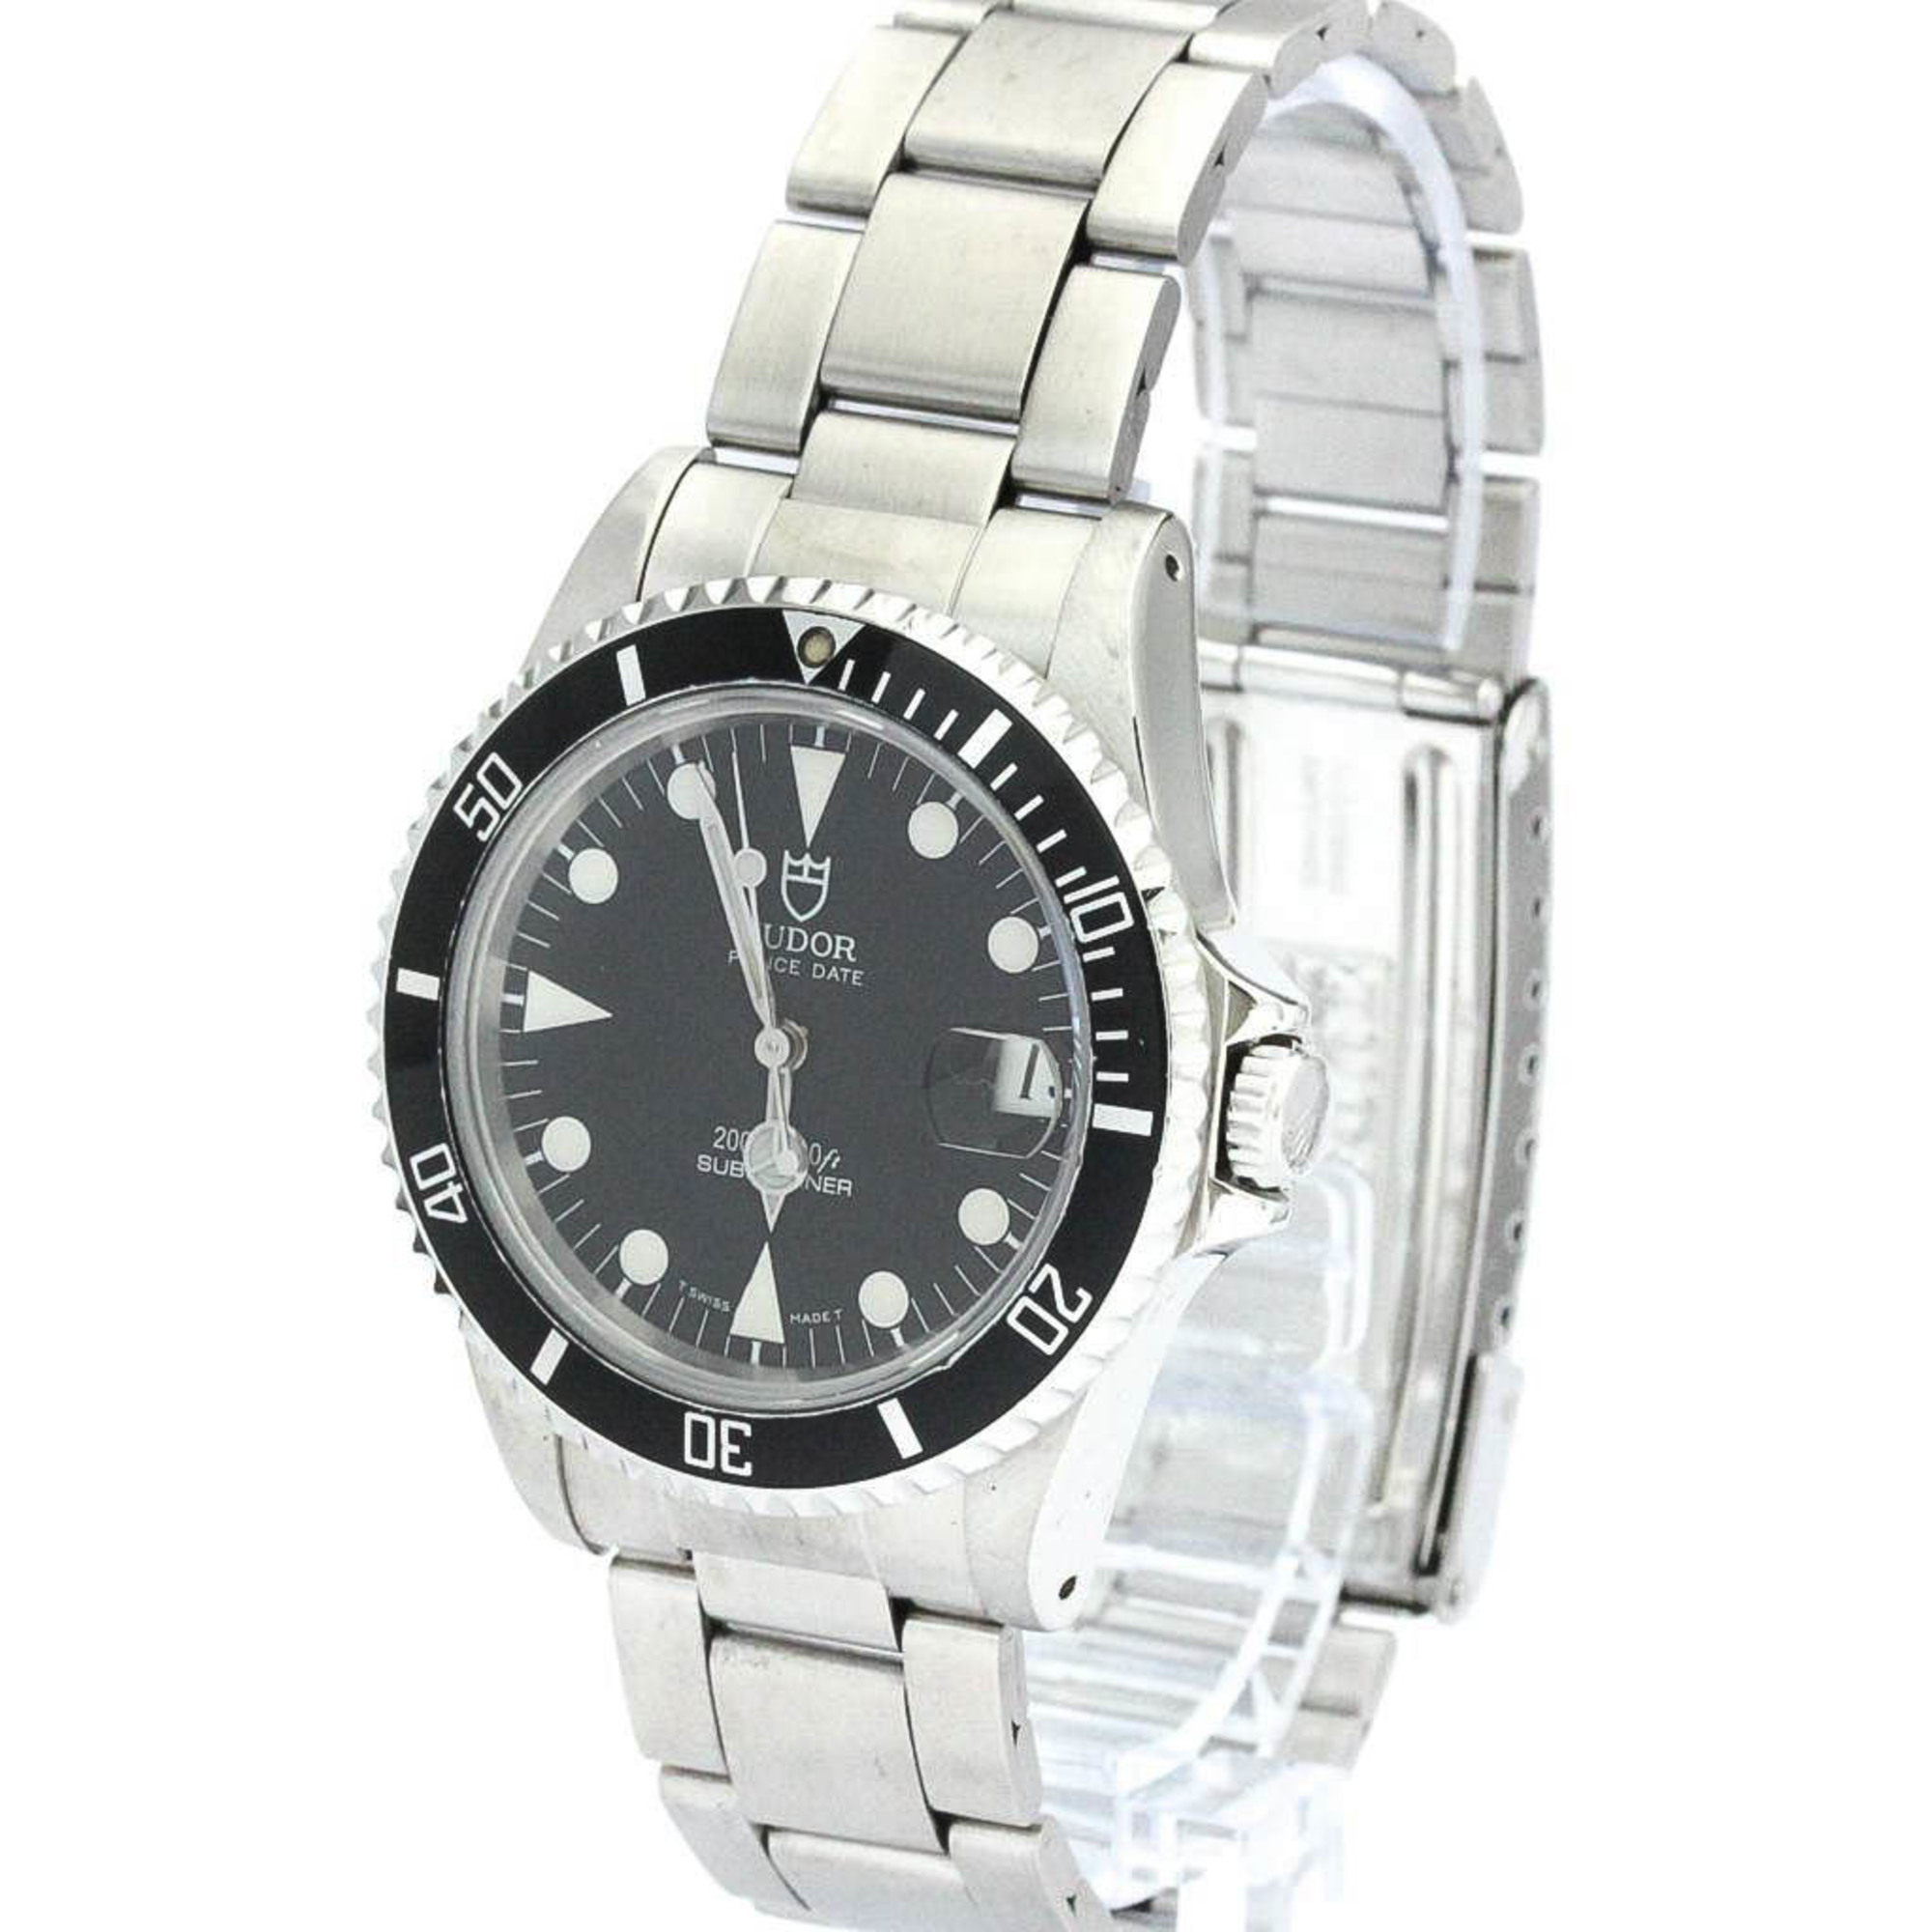 Polished TUDOR Rolex Submarina Steel Automatic Mens Watch 75190 BF560971